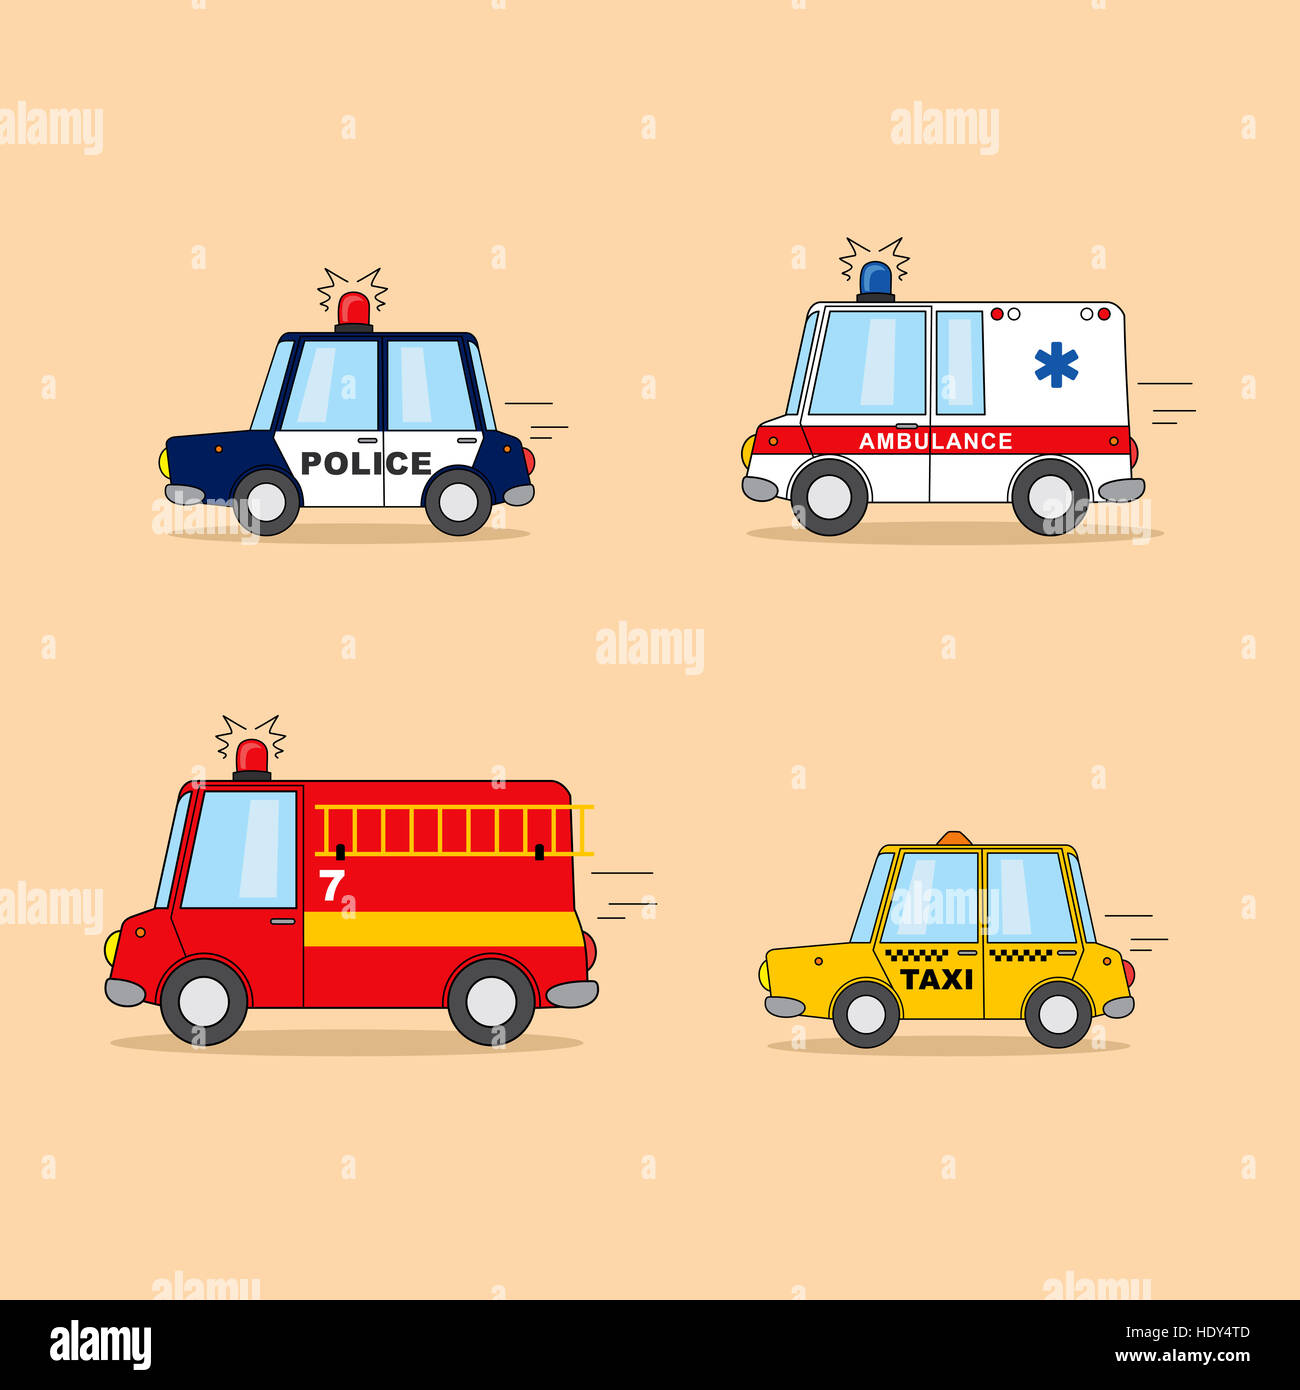 Cartoon ambulance hi-res stock photography and images - Alamy